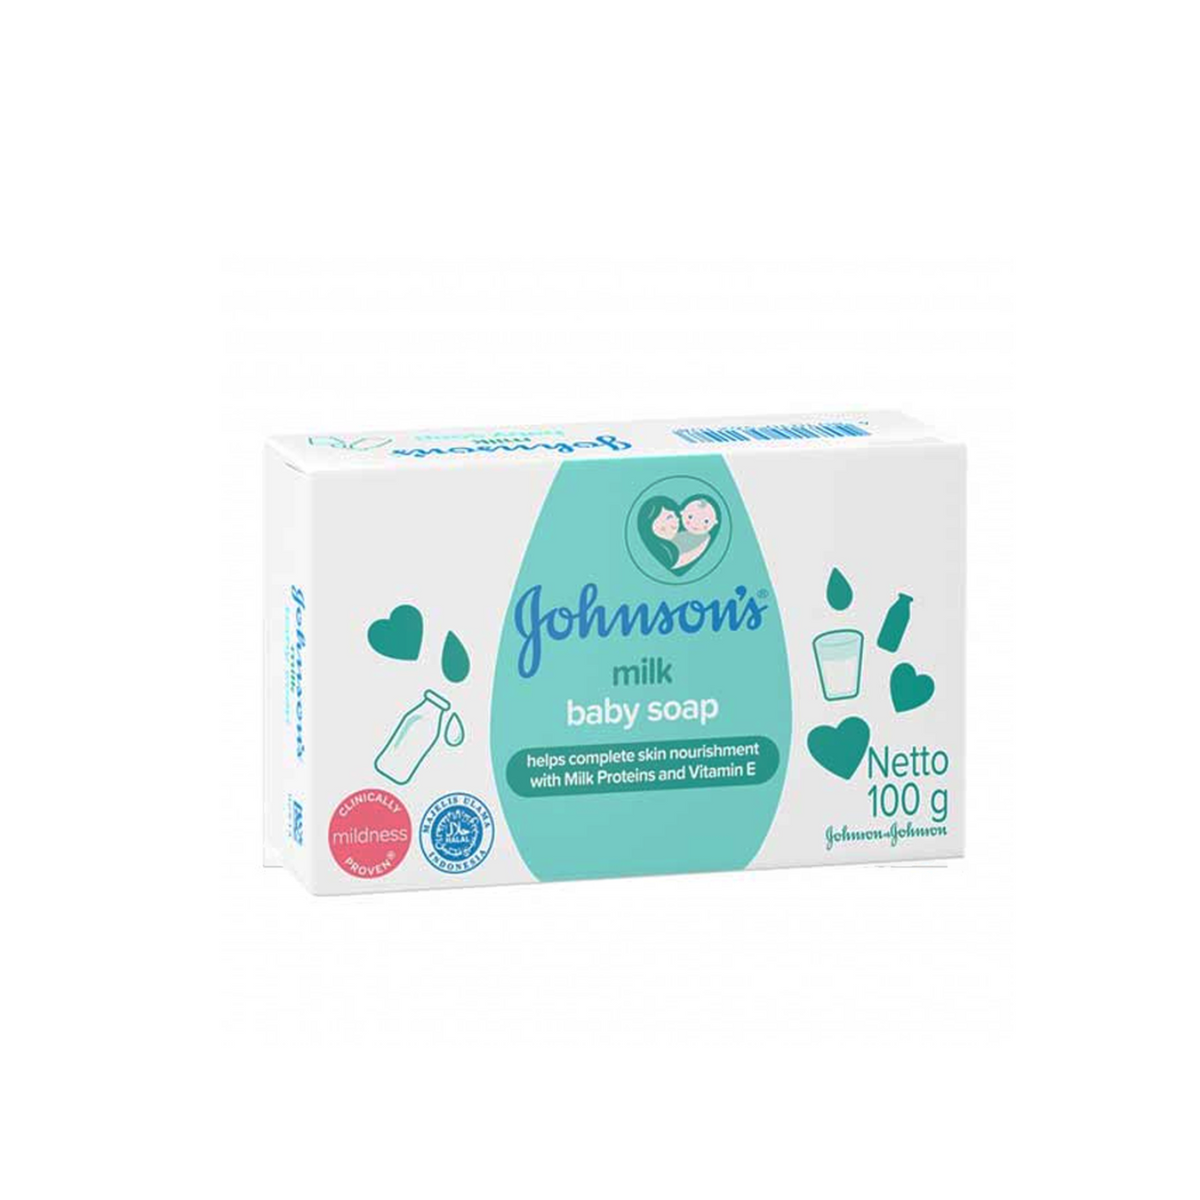 johnsons-milk-baby-soap-netto-100g